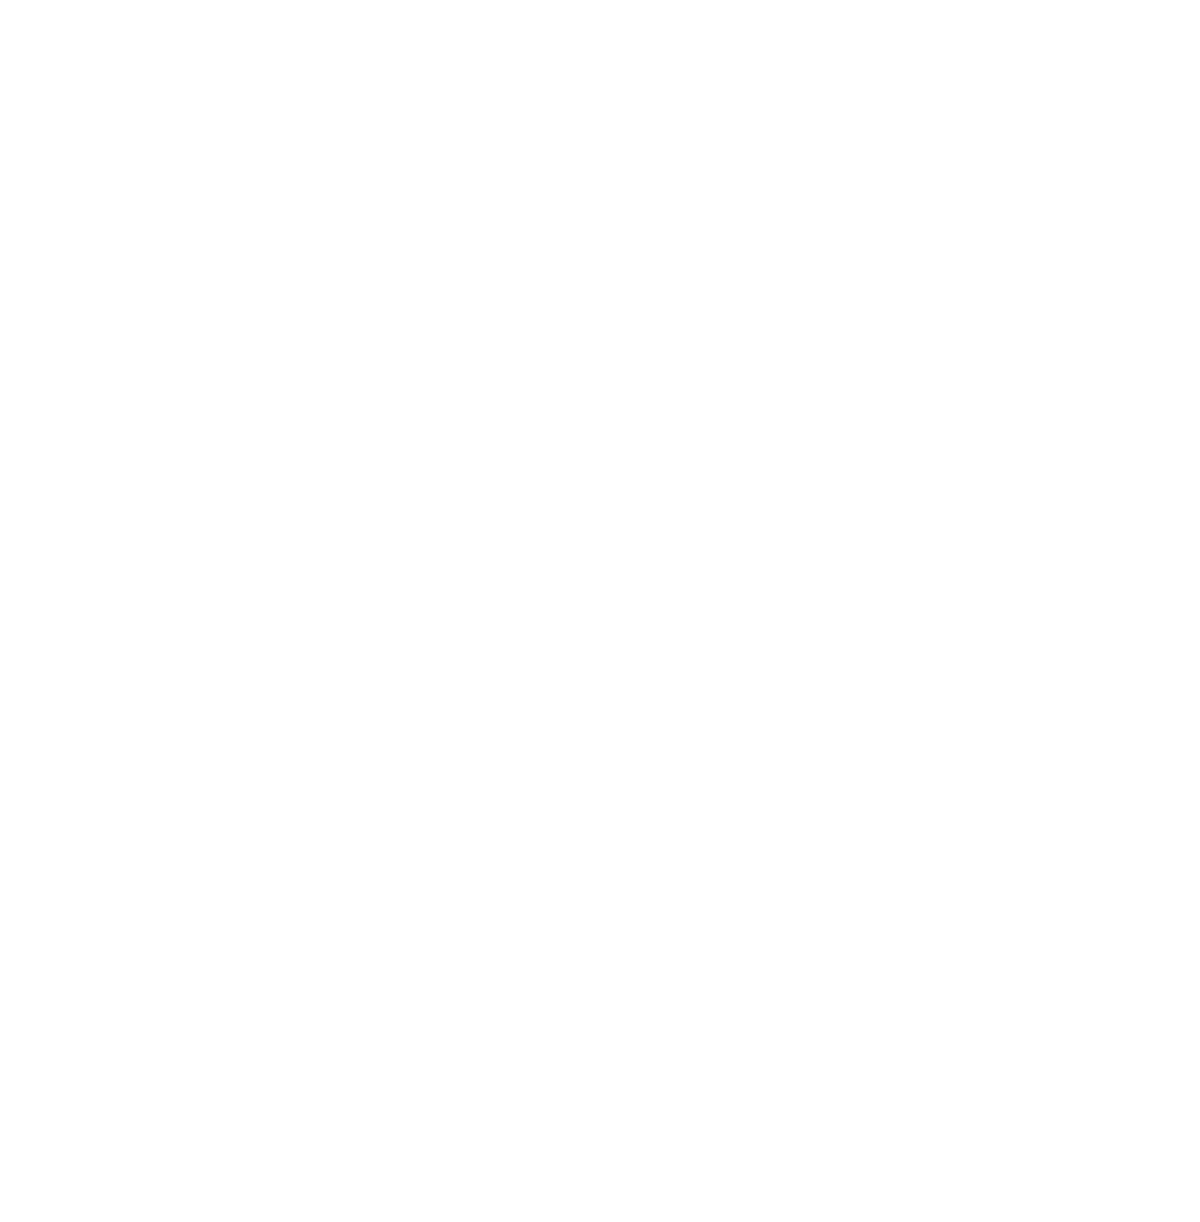 Village of Springville